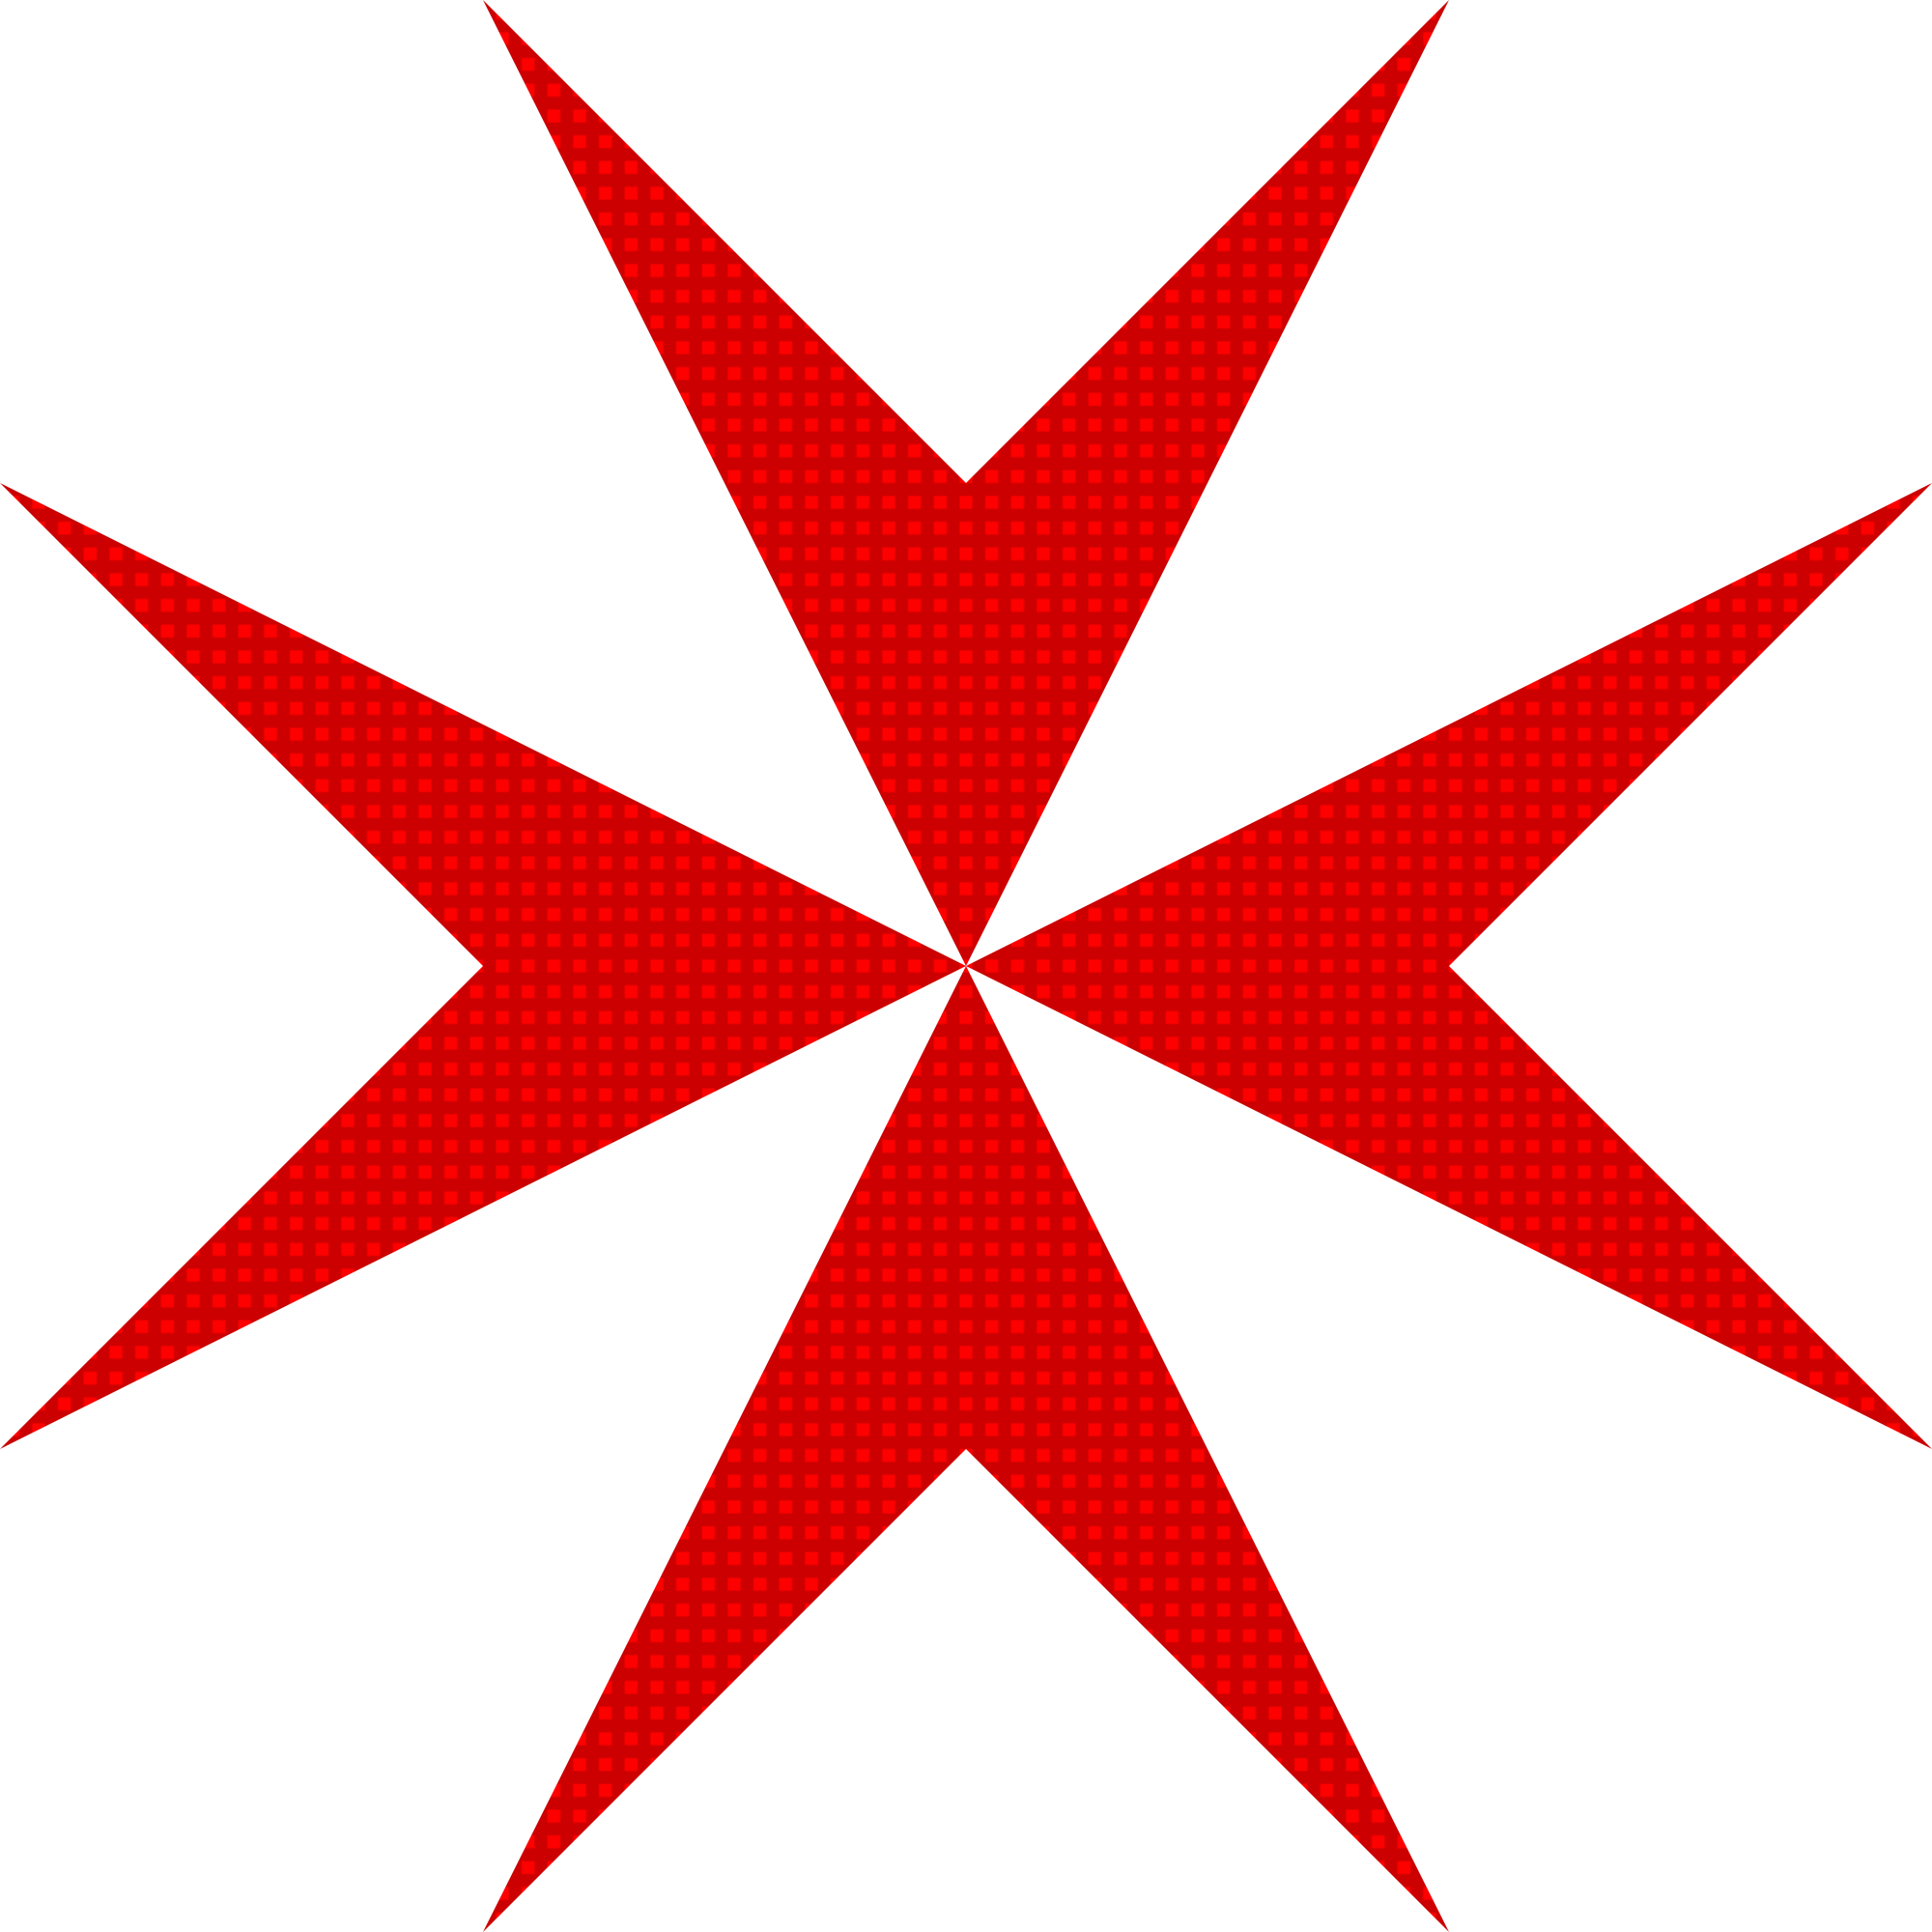 Cross Of The Scottish Knights Templar - Croix Ordre De Malte (2000x2000)